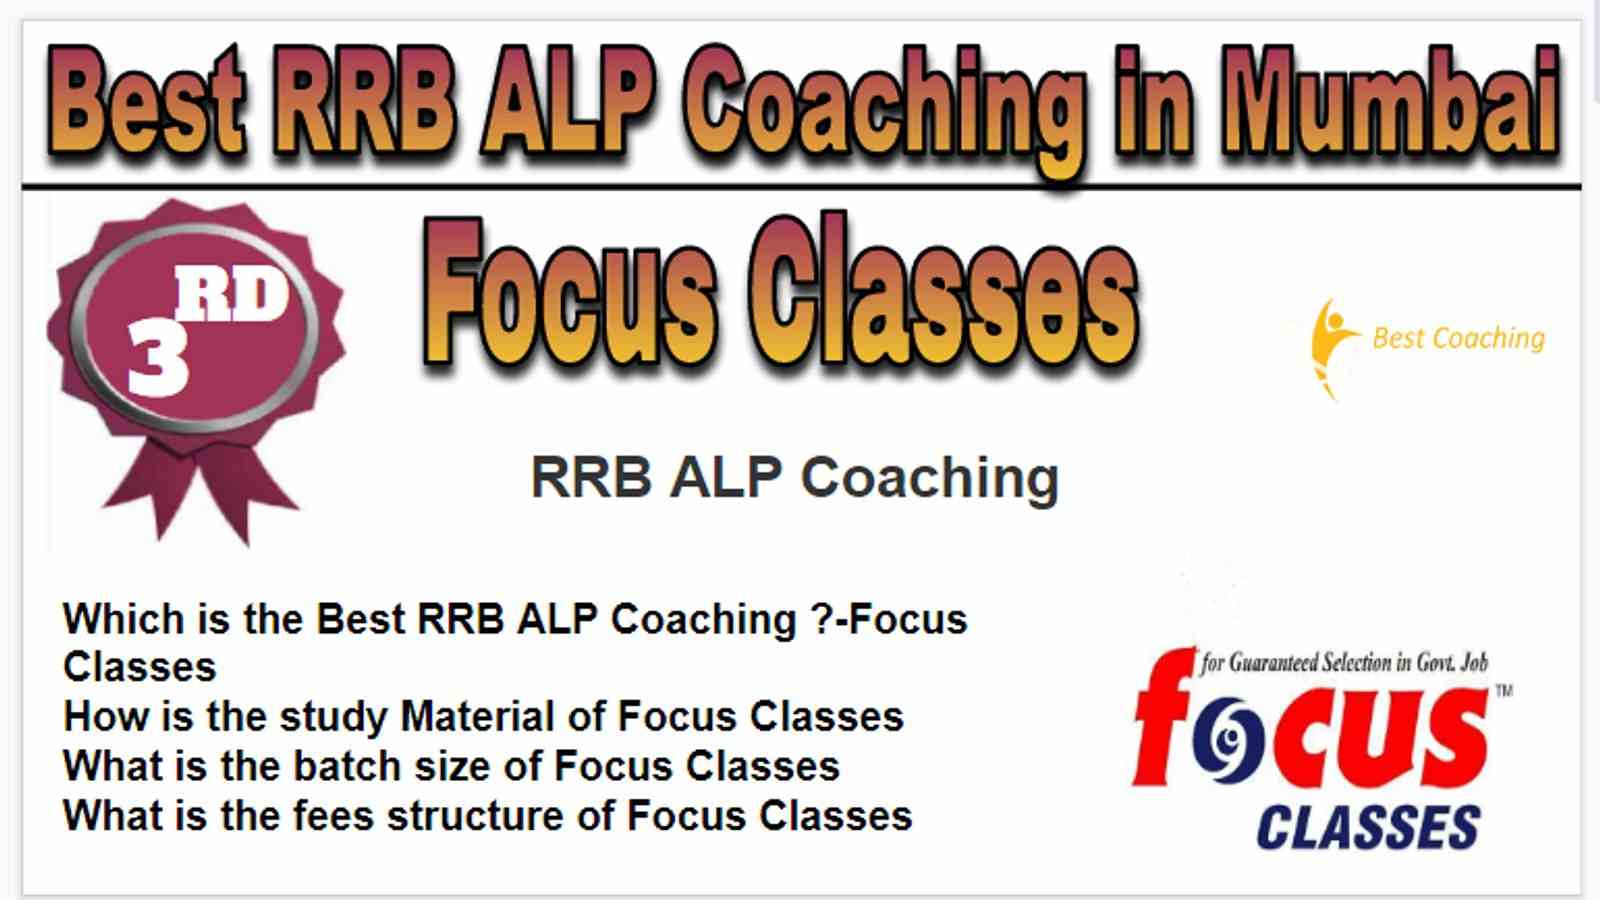 Rank 3 Best RRB ALP Coaching in Mumbai